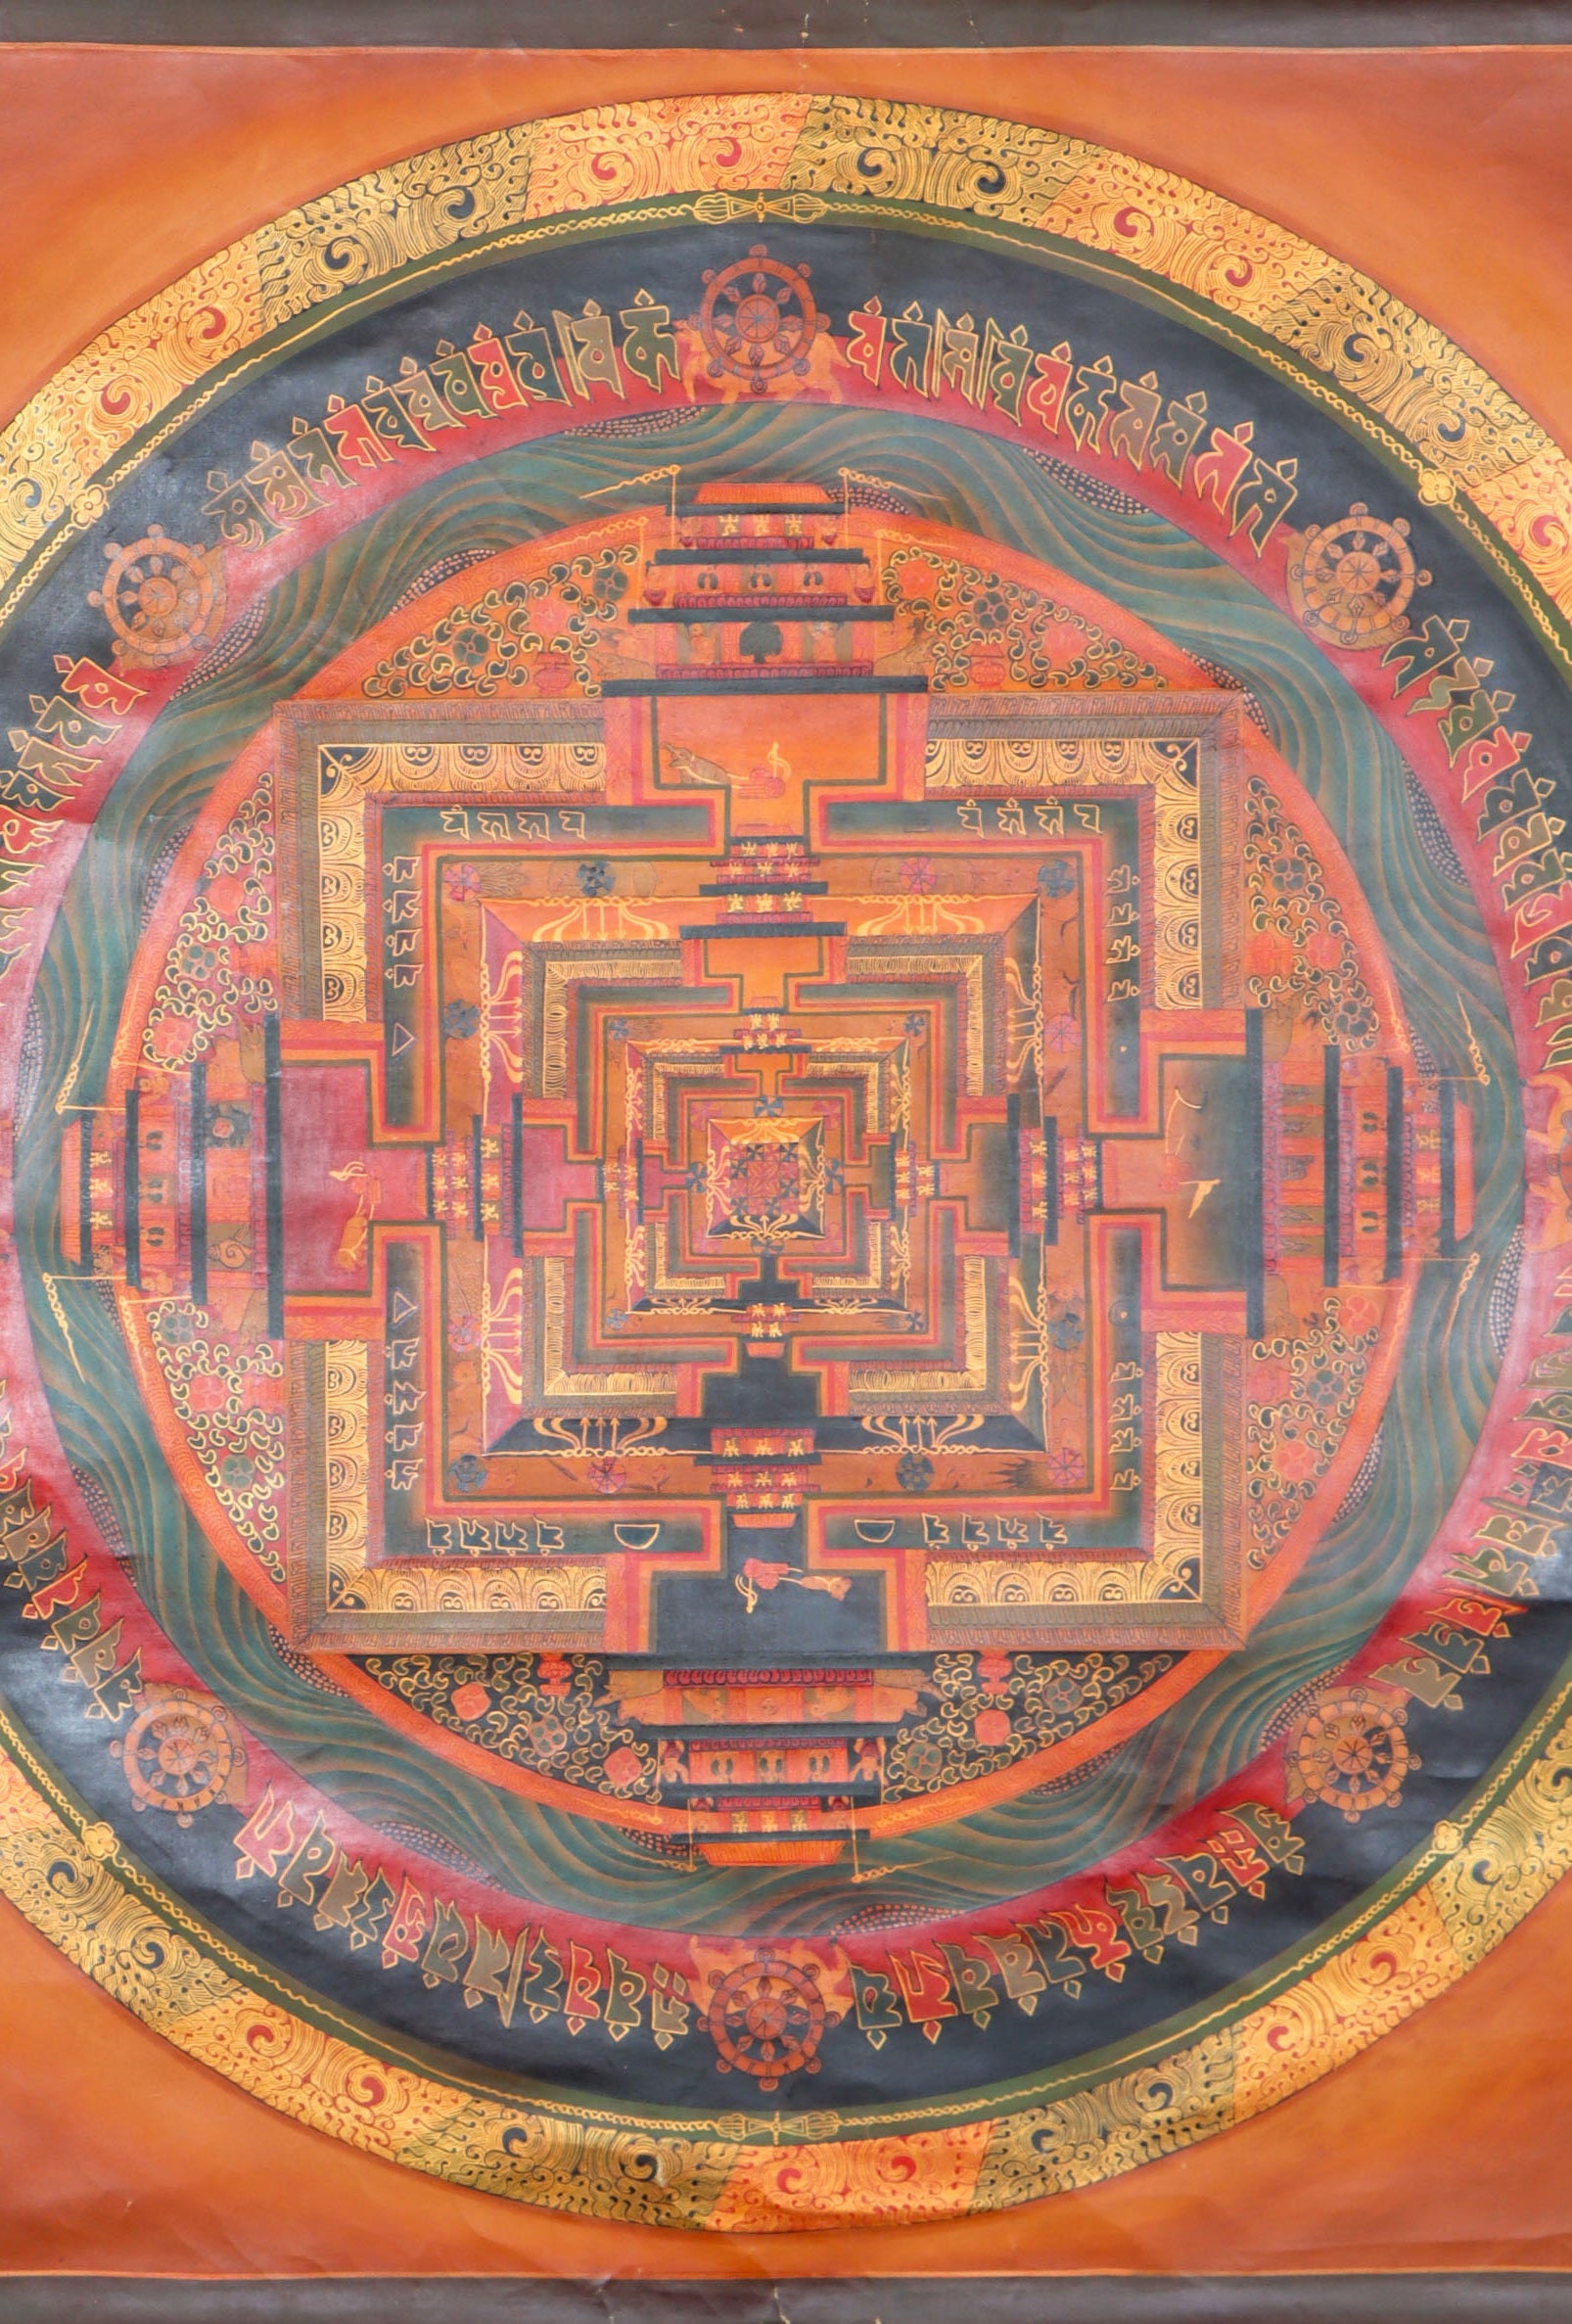  Kalachakra Mandala Thangka for spirituality.